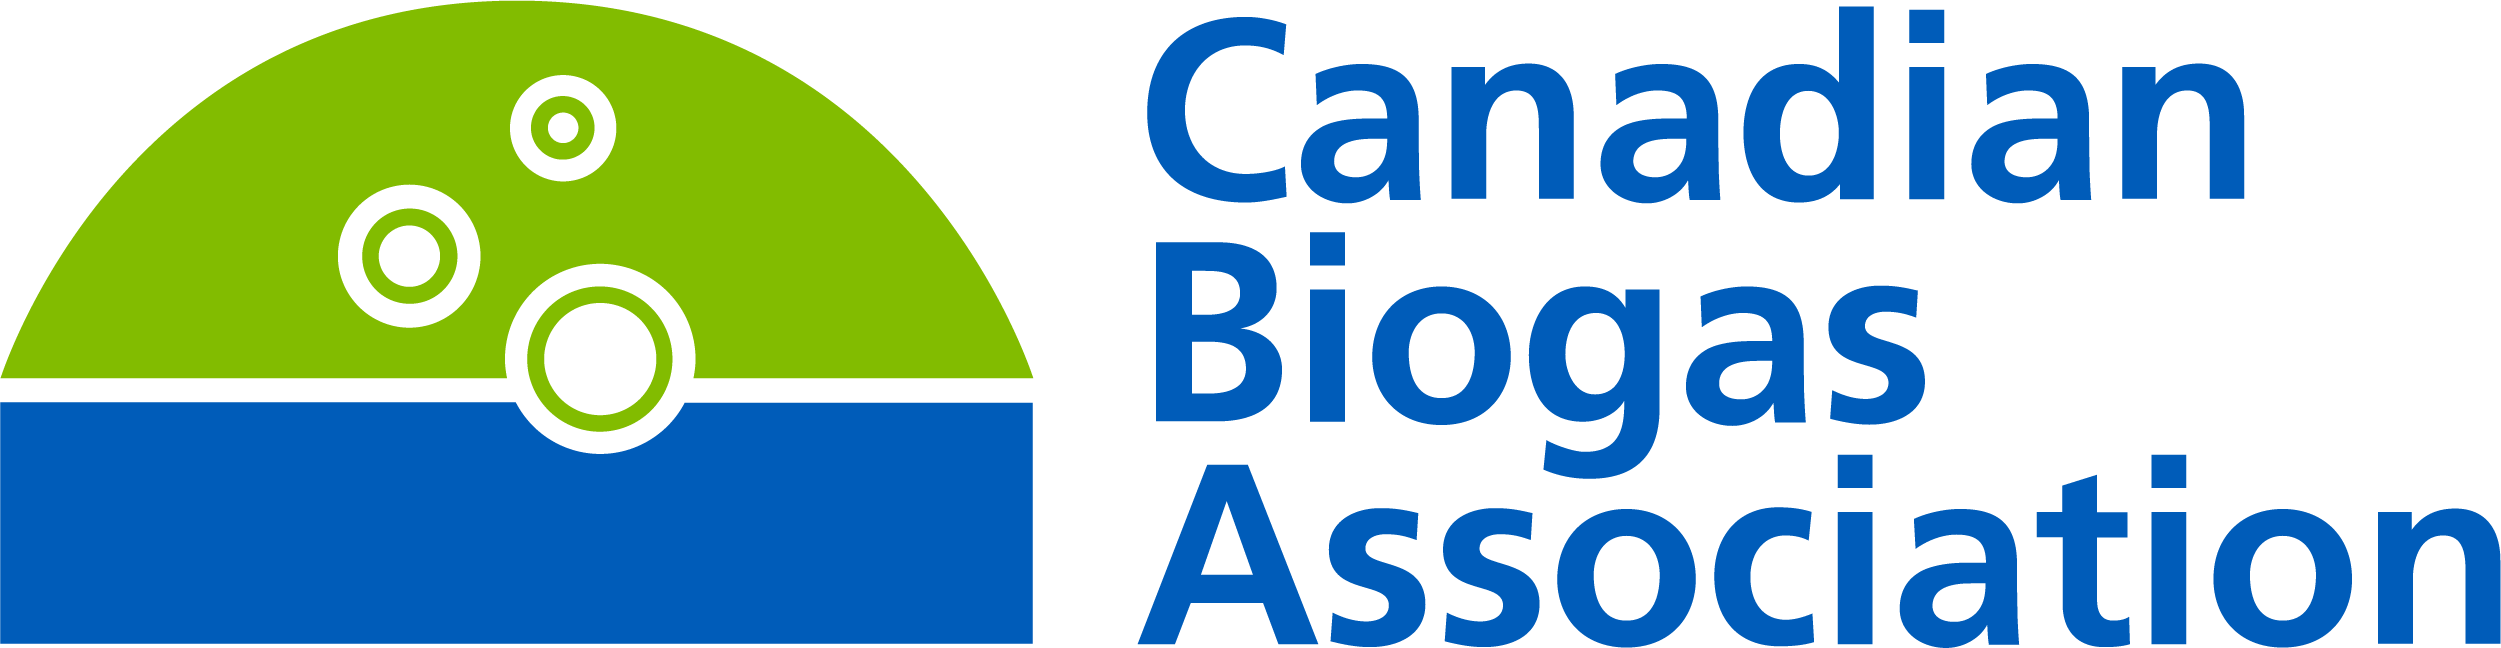 canadian biogas association logo